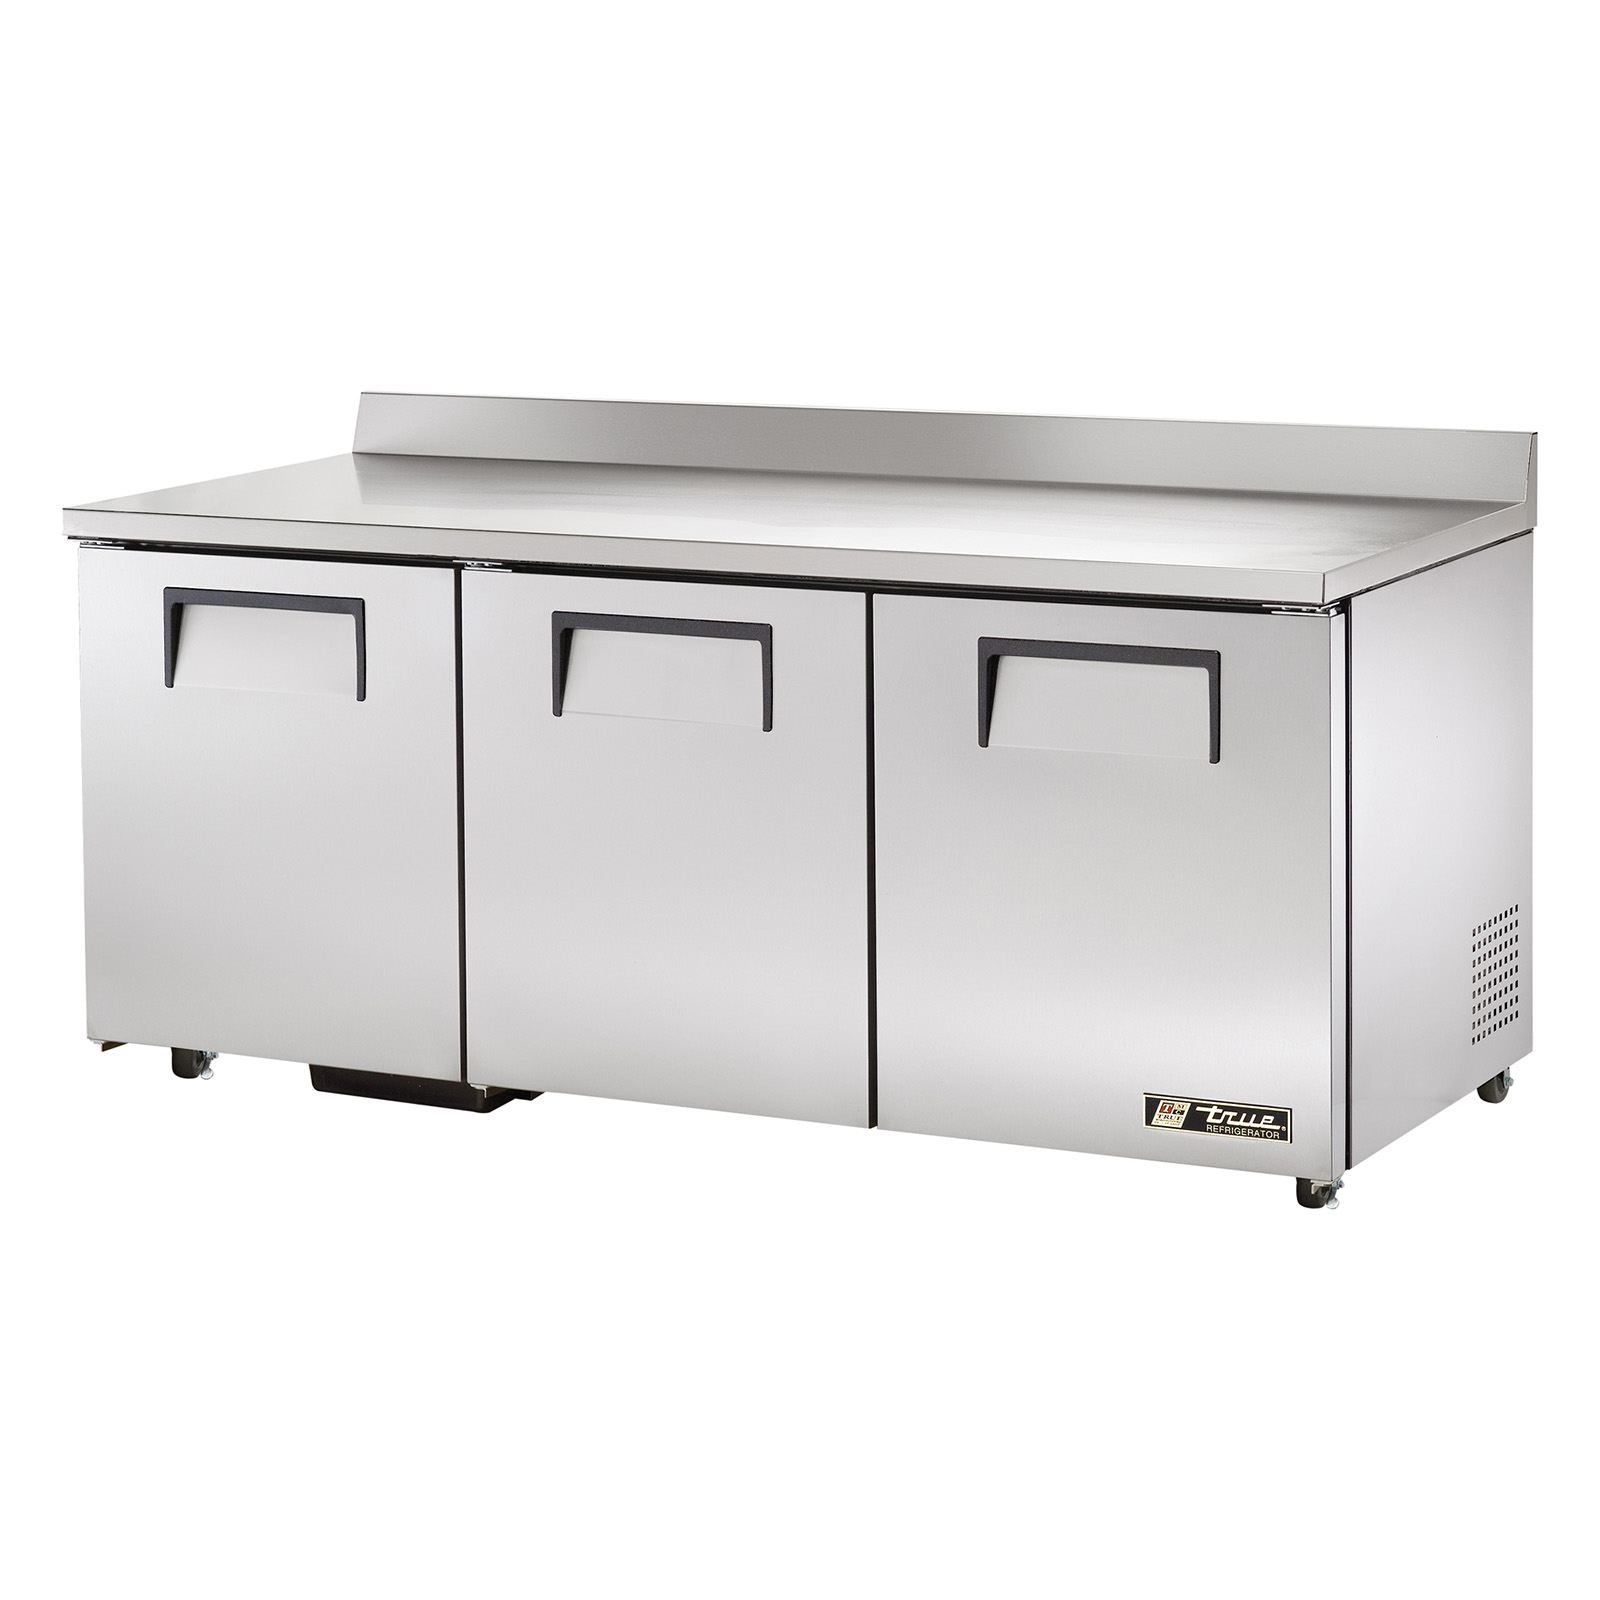 True Food Service Equipment TWT-72-ADA Refrigerated Counter, Work Top